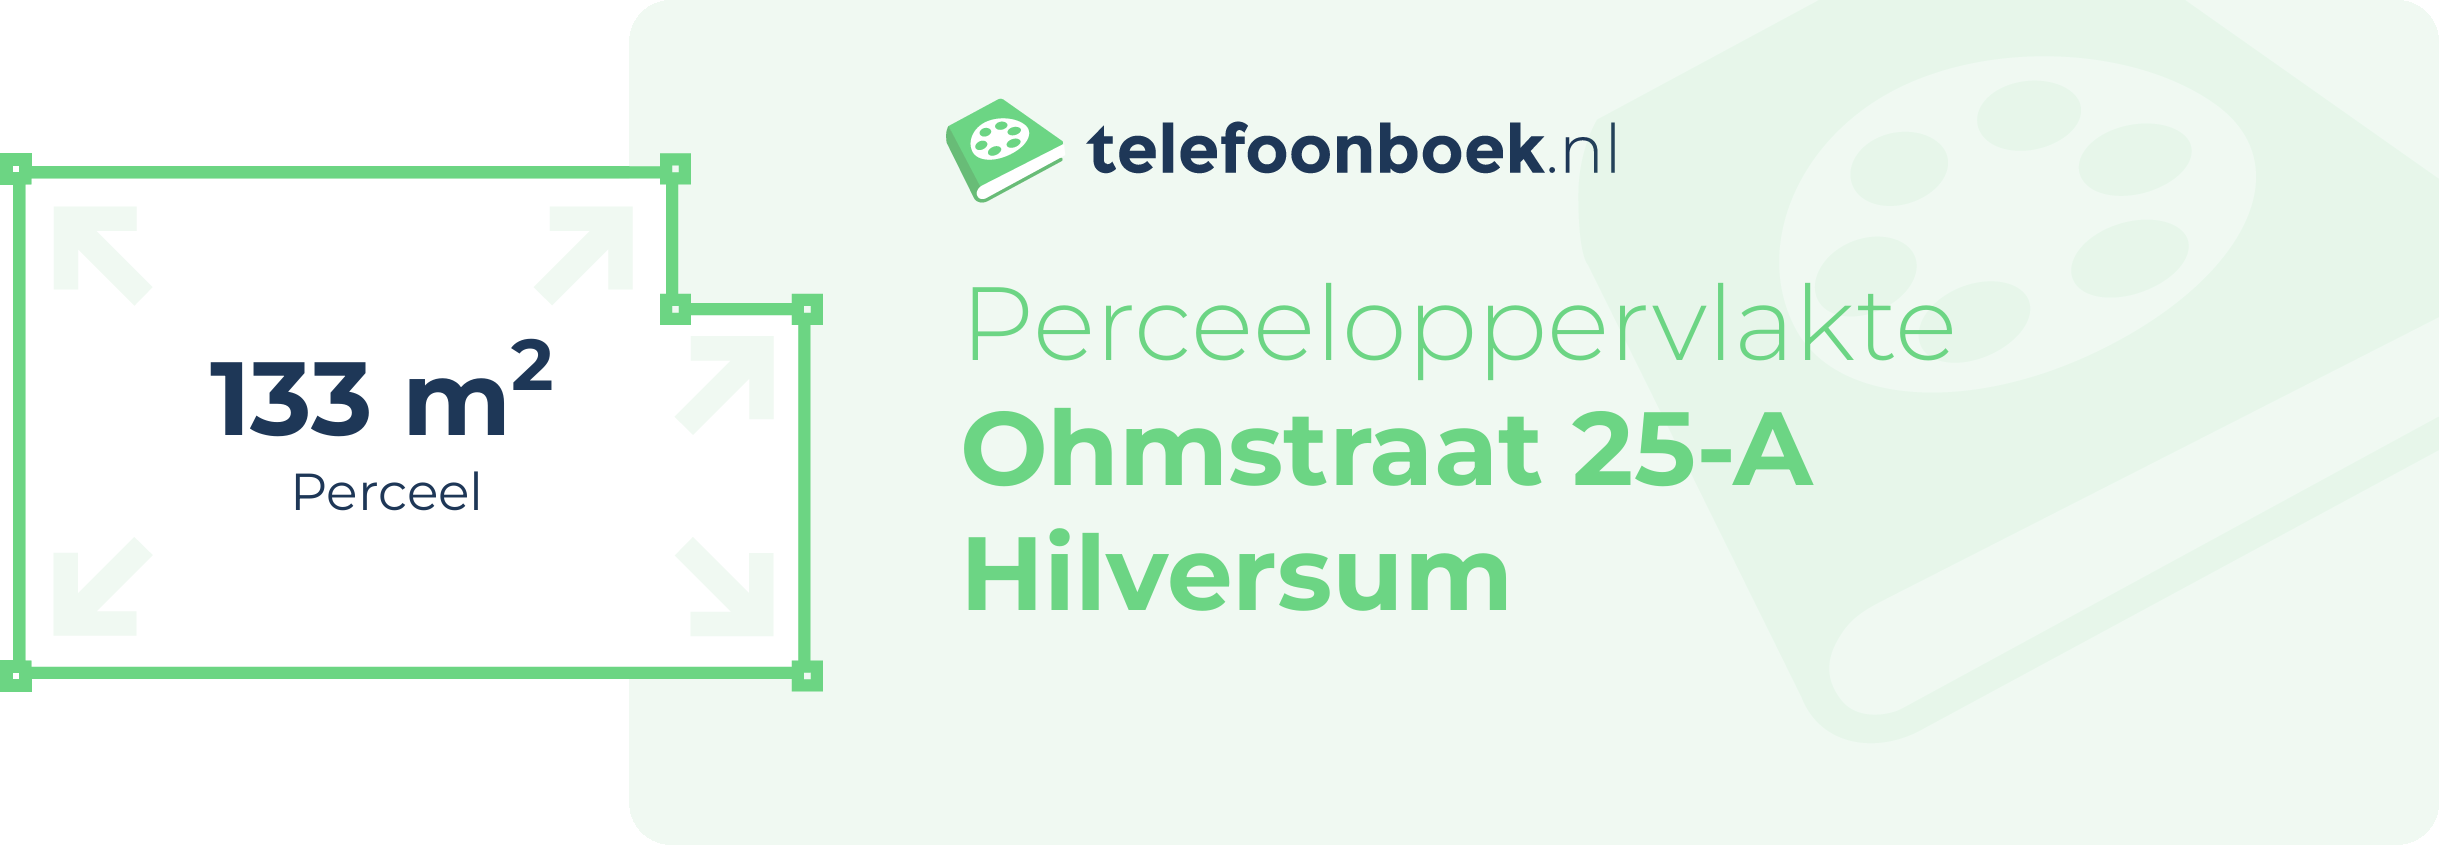 Perceeloppervlakte Ohmstraat 25-A Hilversum